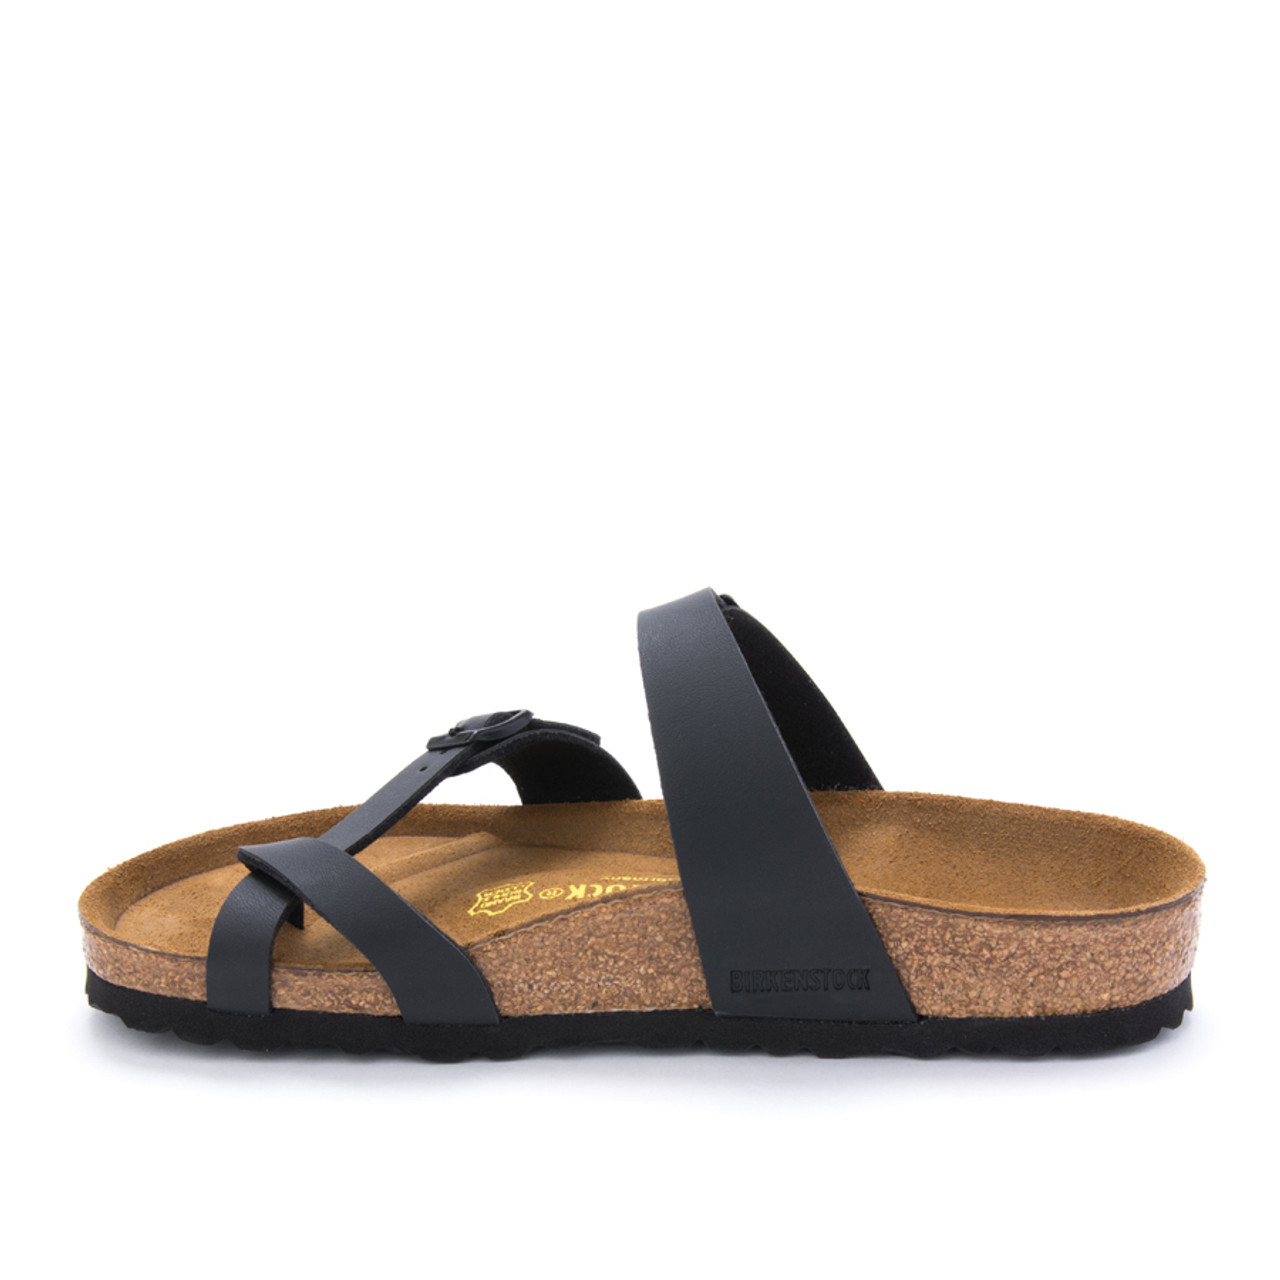 Birkenstock Mayari Leather Black Birks Sandals Size 6W/4M